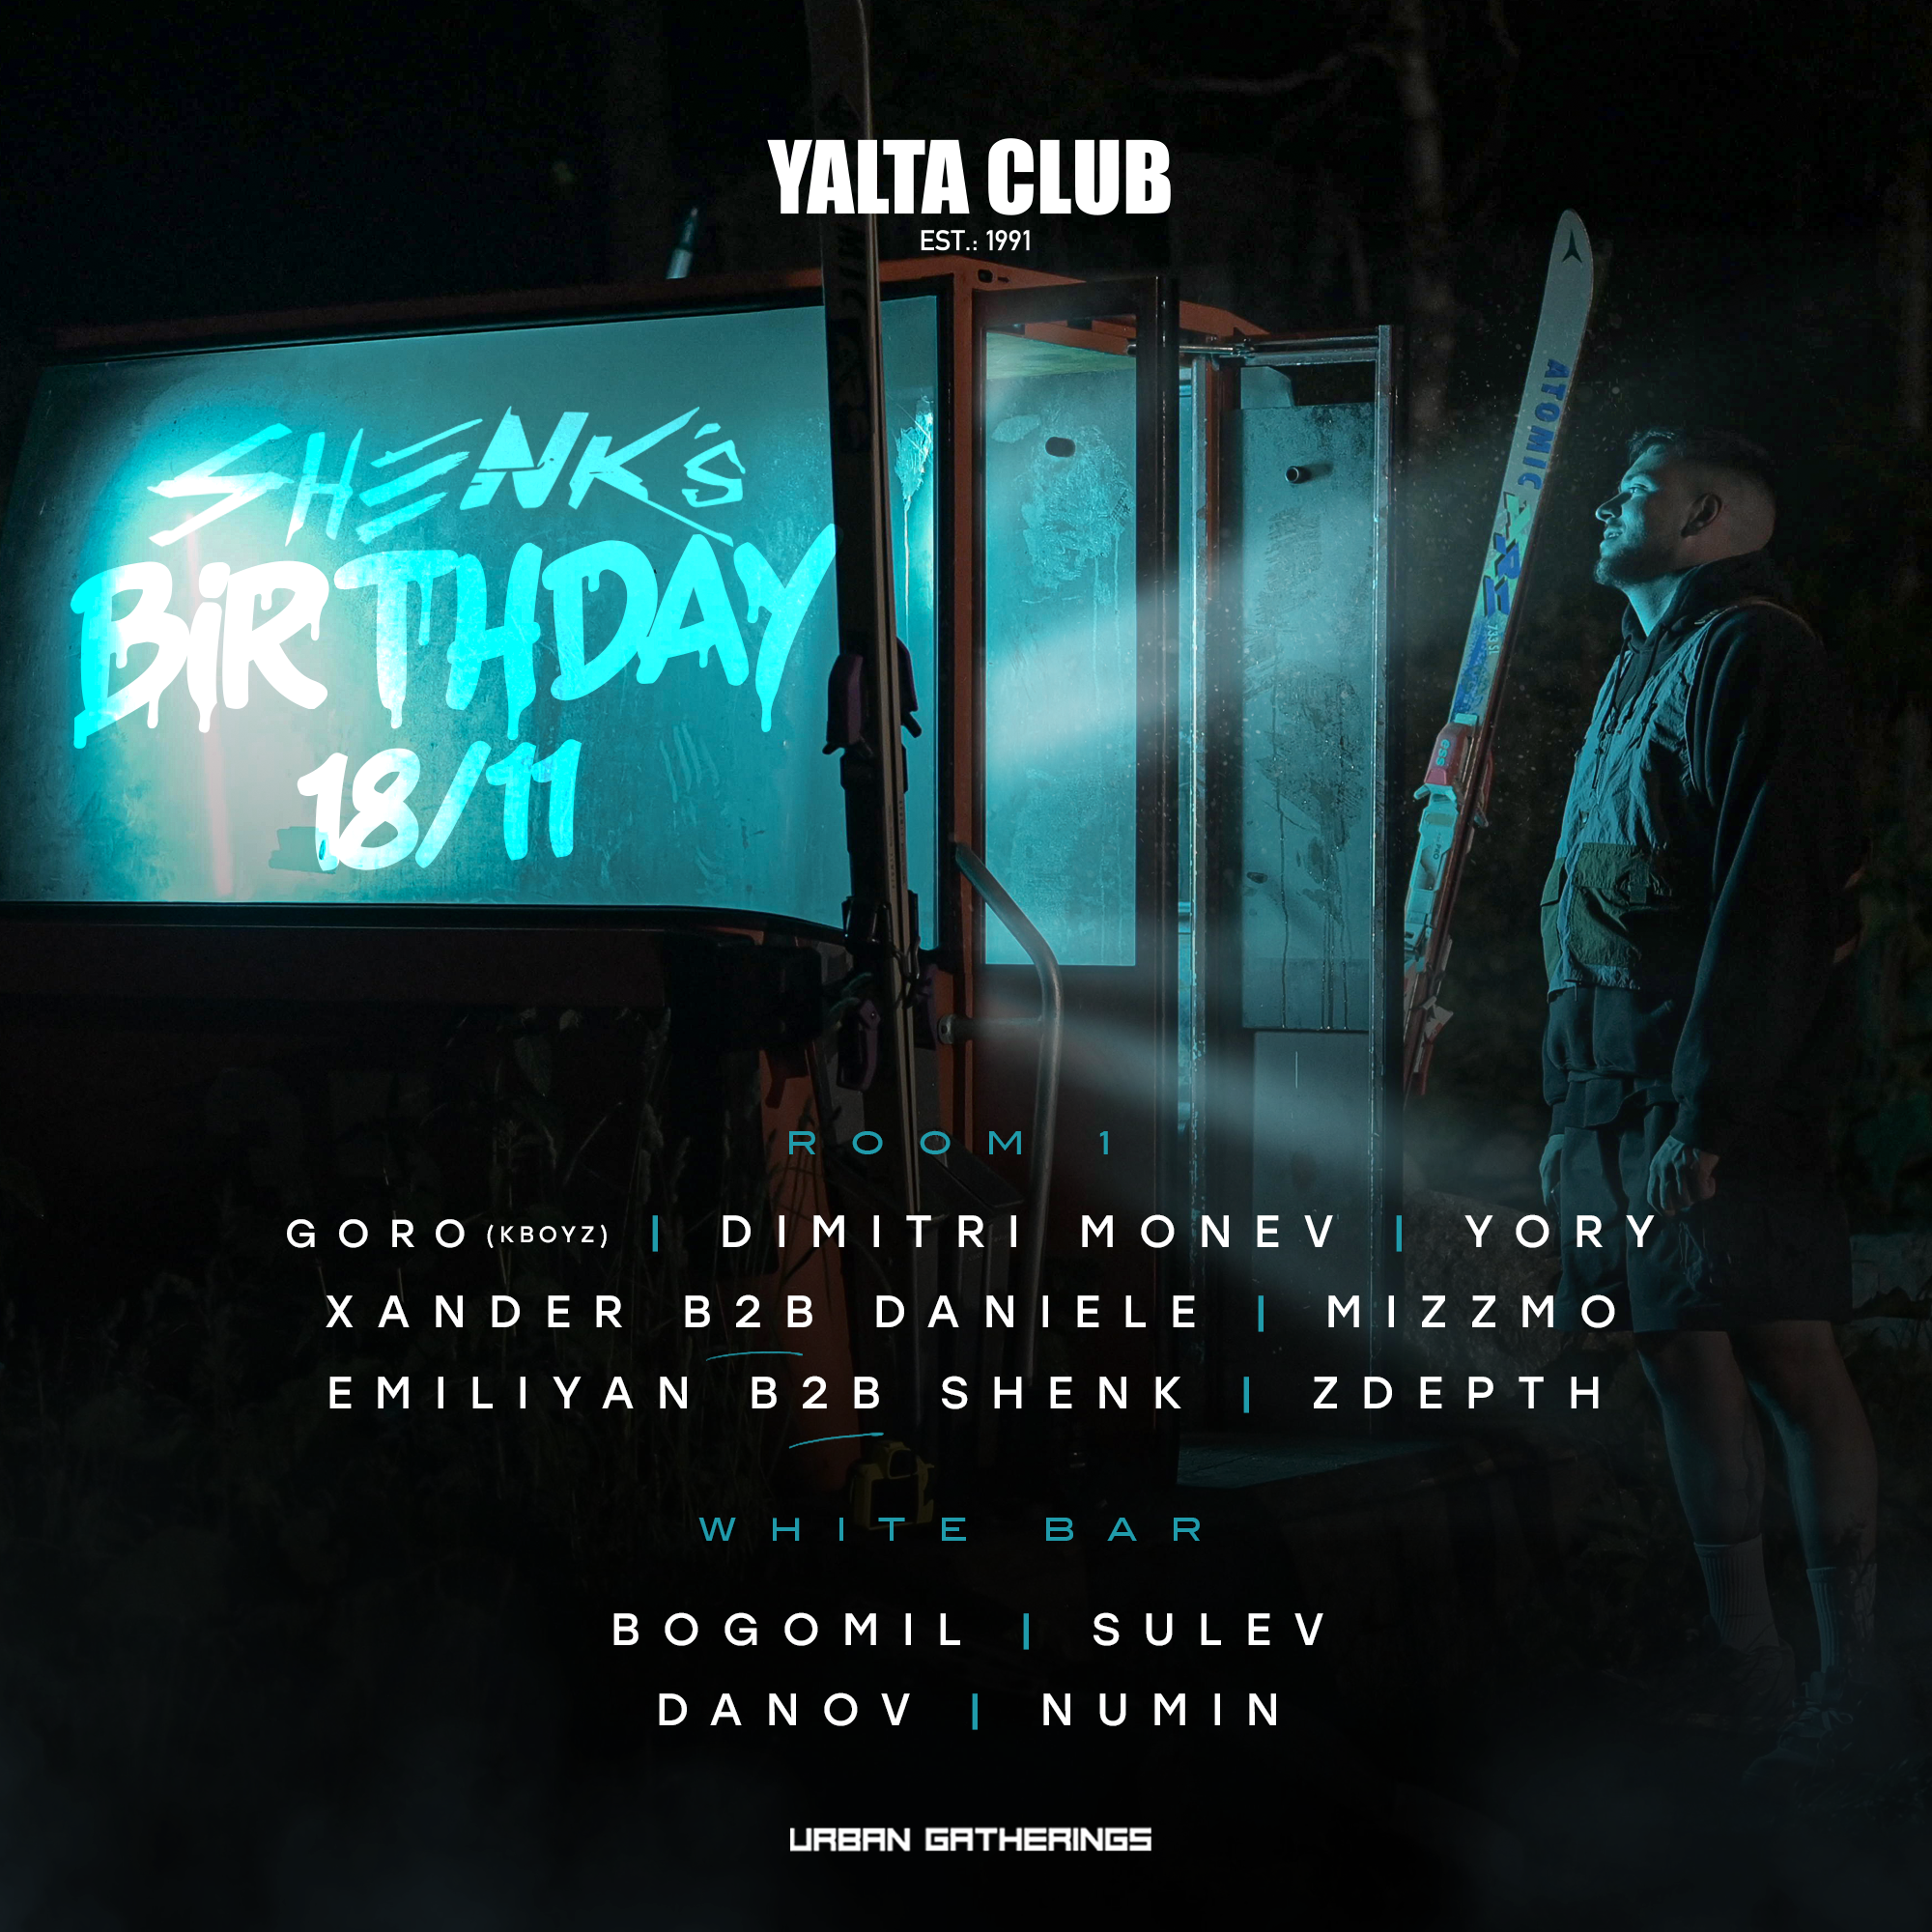 SHENK'S BIRTHDAY X Yalta Club - フライヤー表